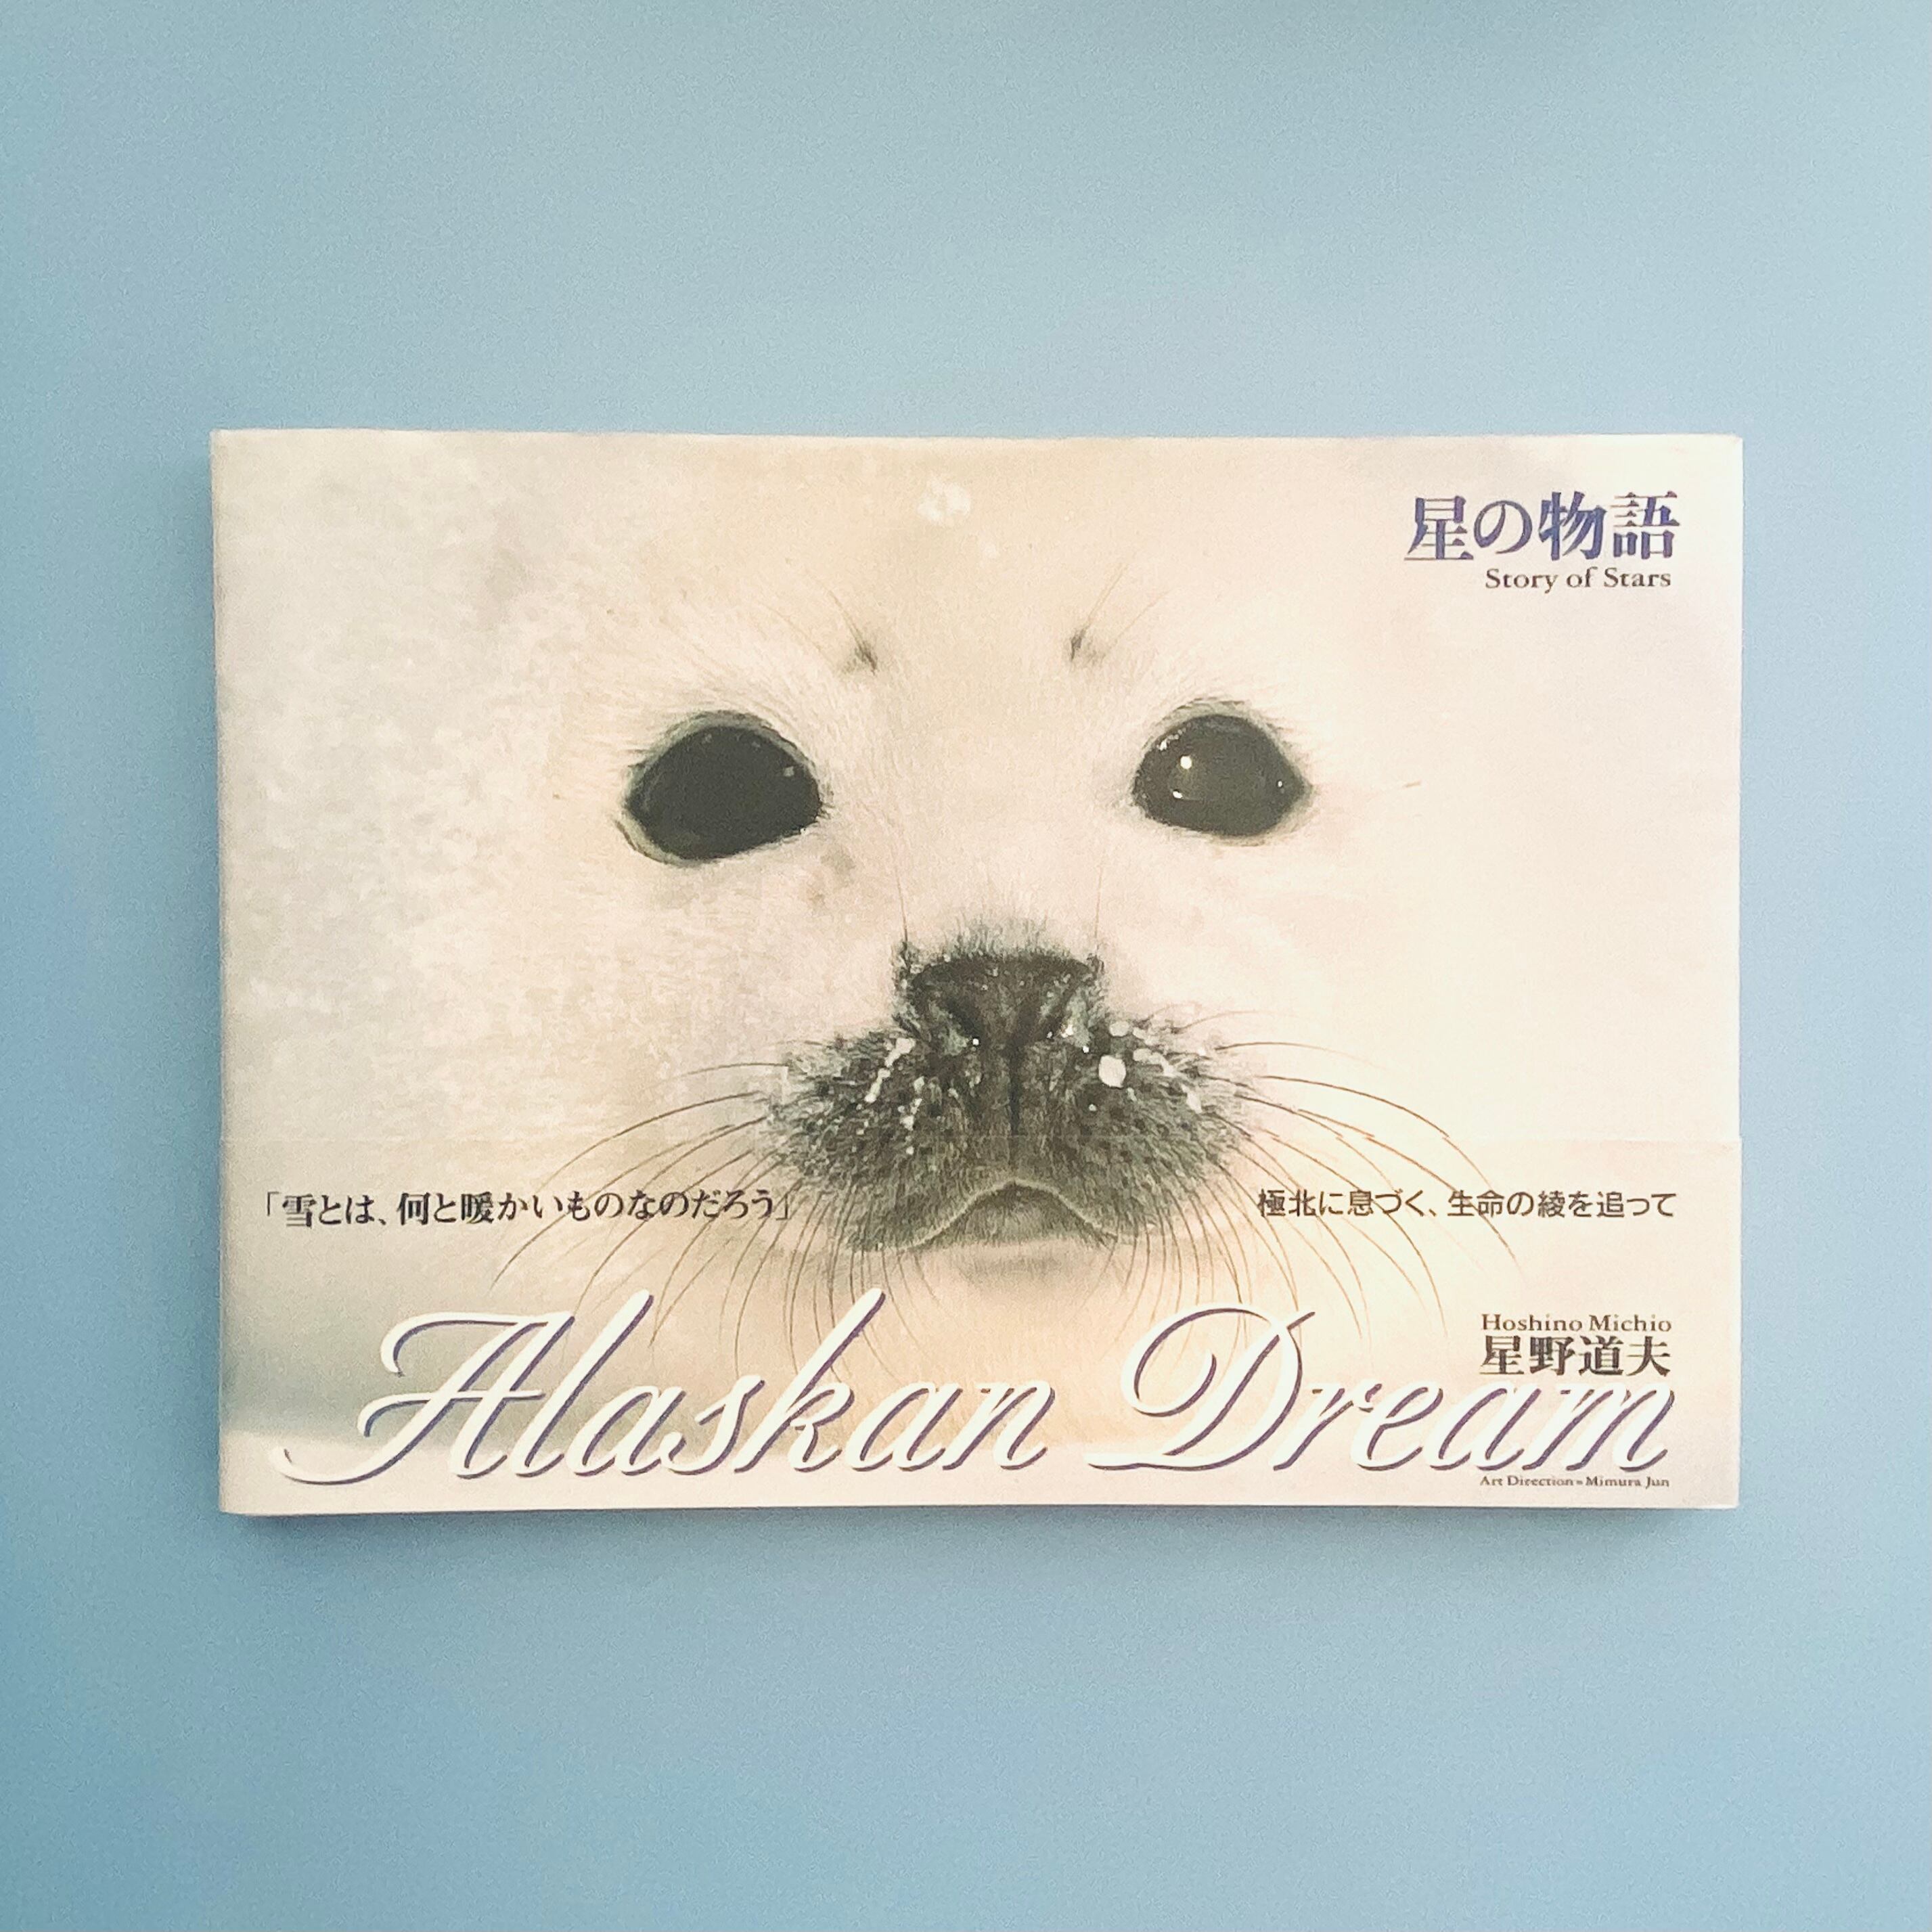 Alaskan Dream1 星の物語 / 星野道夫 | 京都の古本屋 三条櫻屋